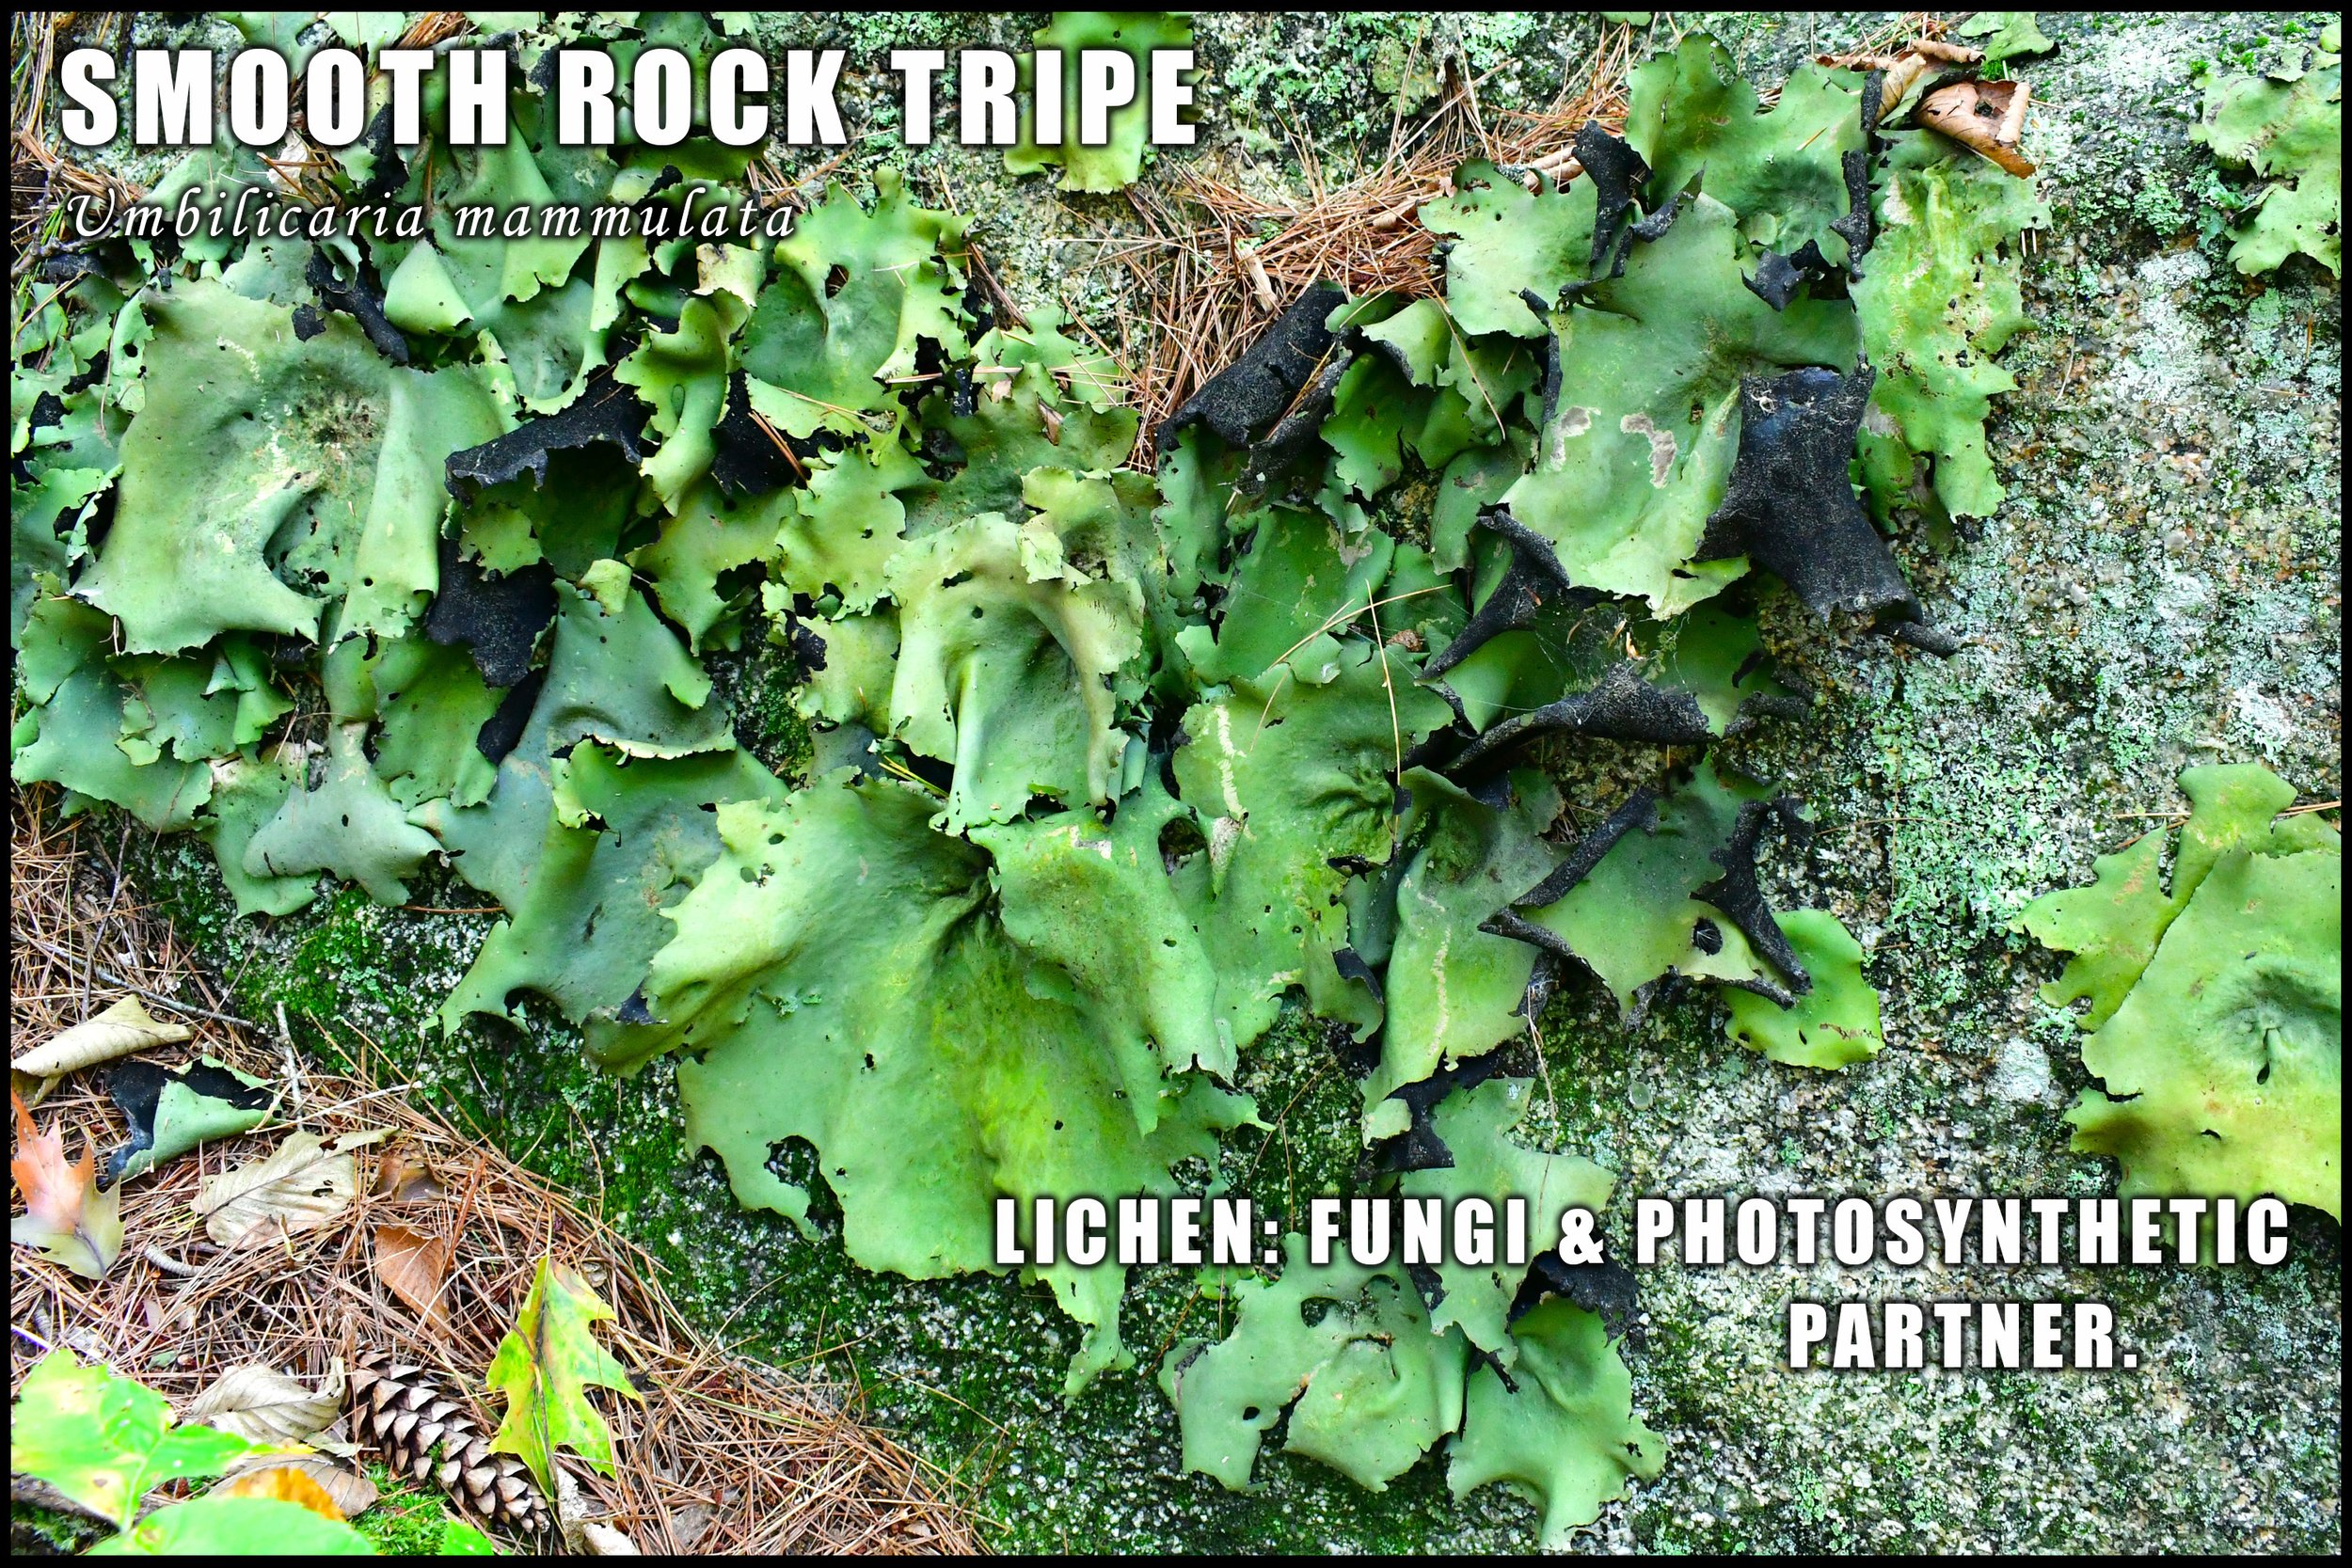 Smooth Rock Tripe on Boulders at Ravenswood Park